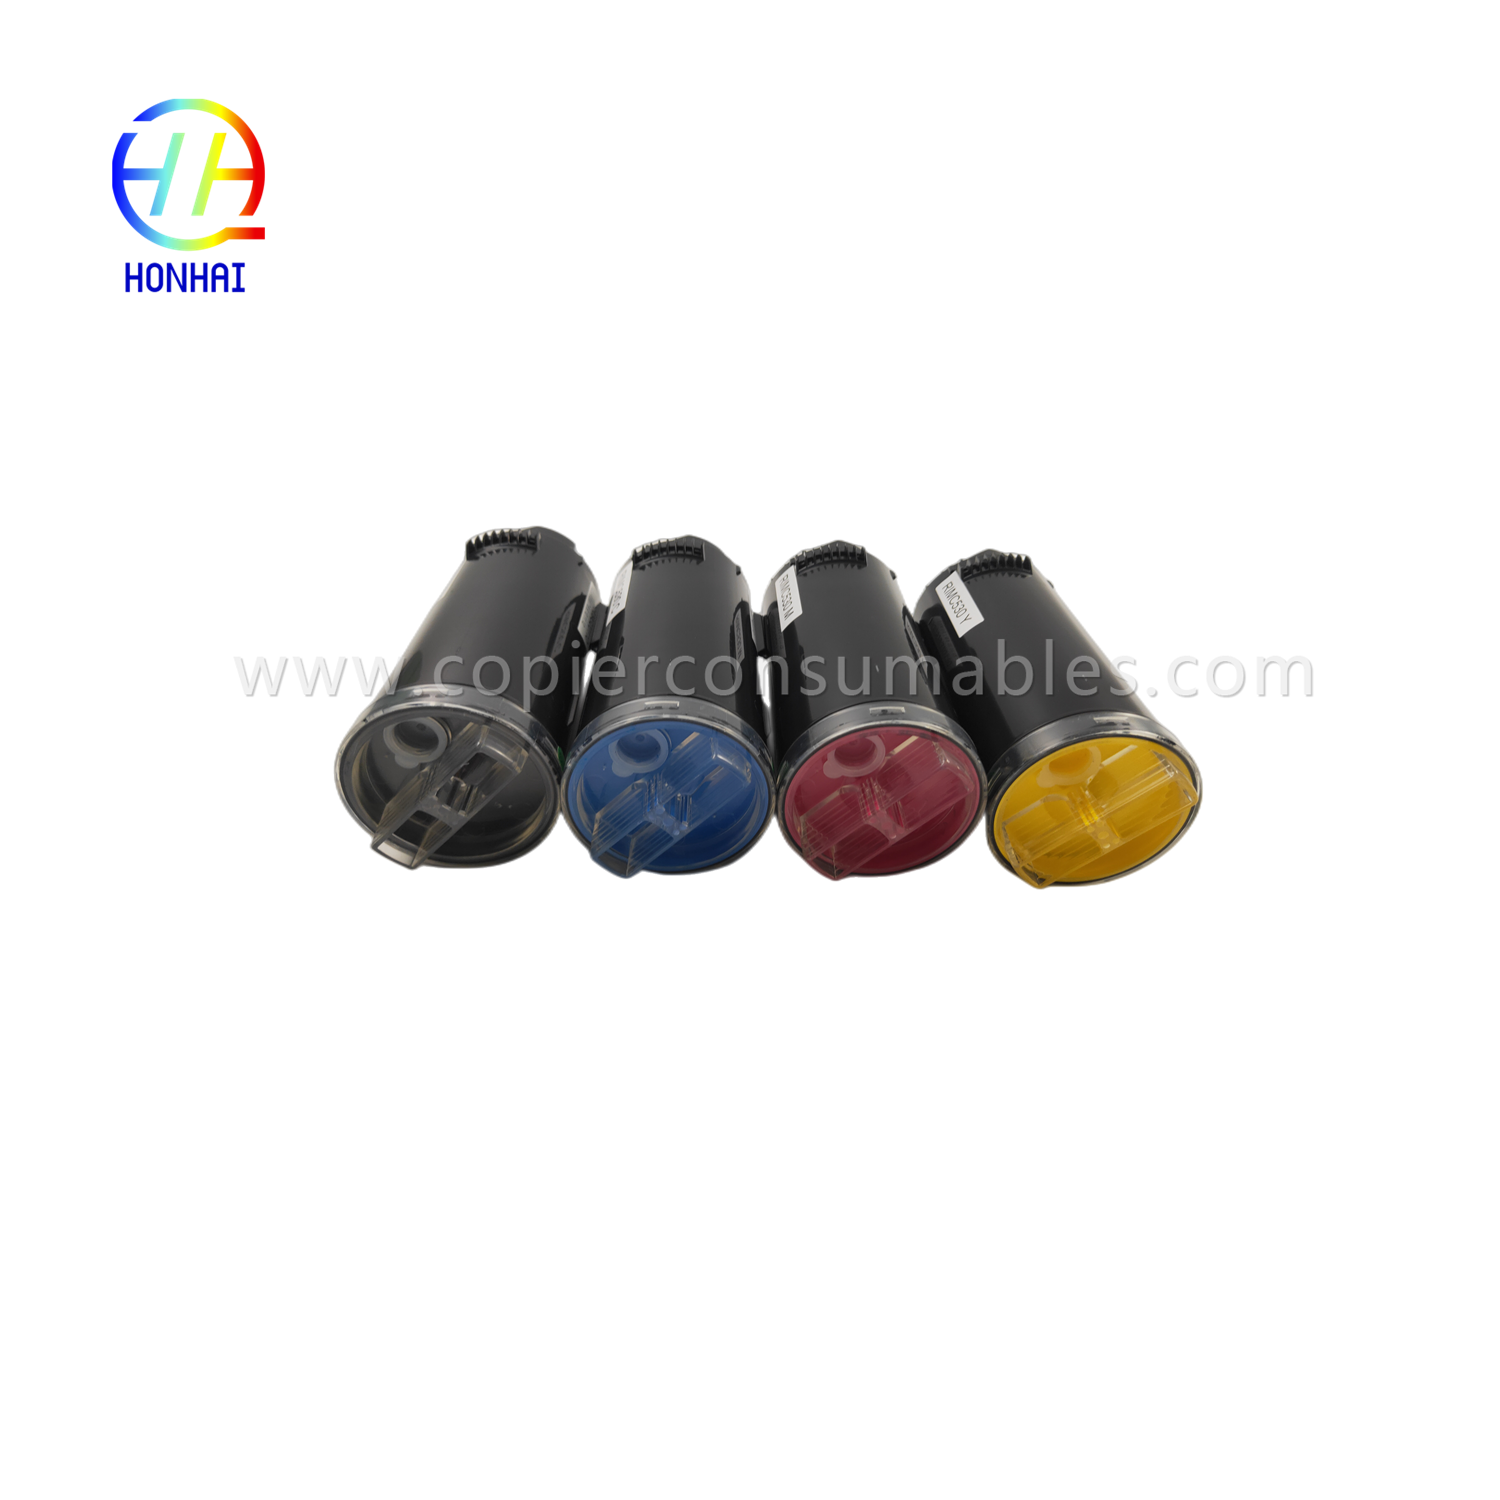 https://c585.goodao.net/toner-cartridge-set-imported-powder-for-ricoh-imc530-imc530f-imc530fb-ref-418240-ref-418241-ref-418242-ref-418243-product/